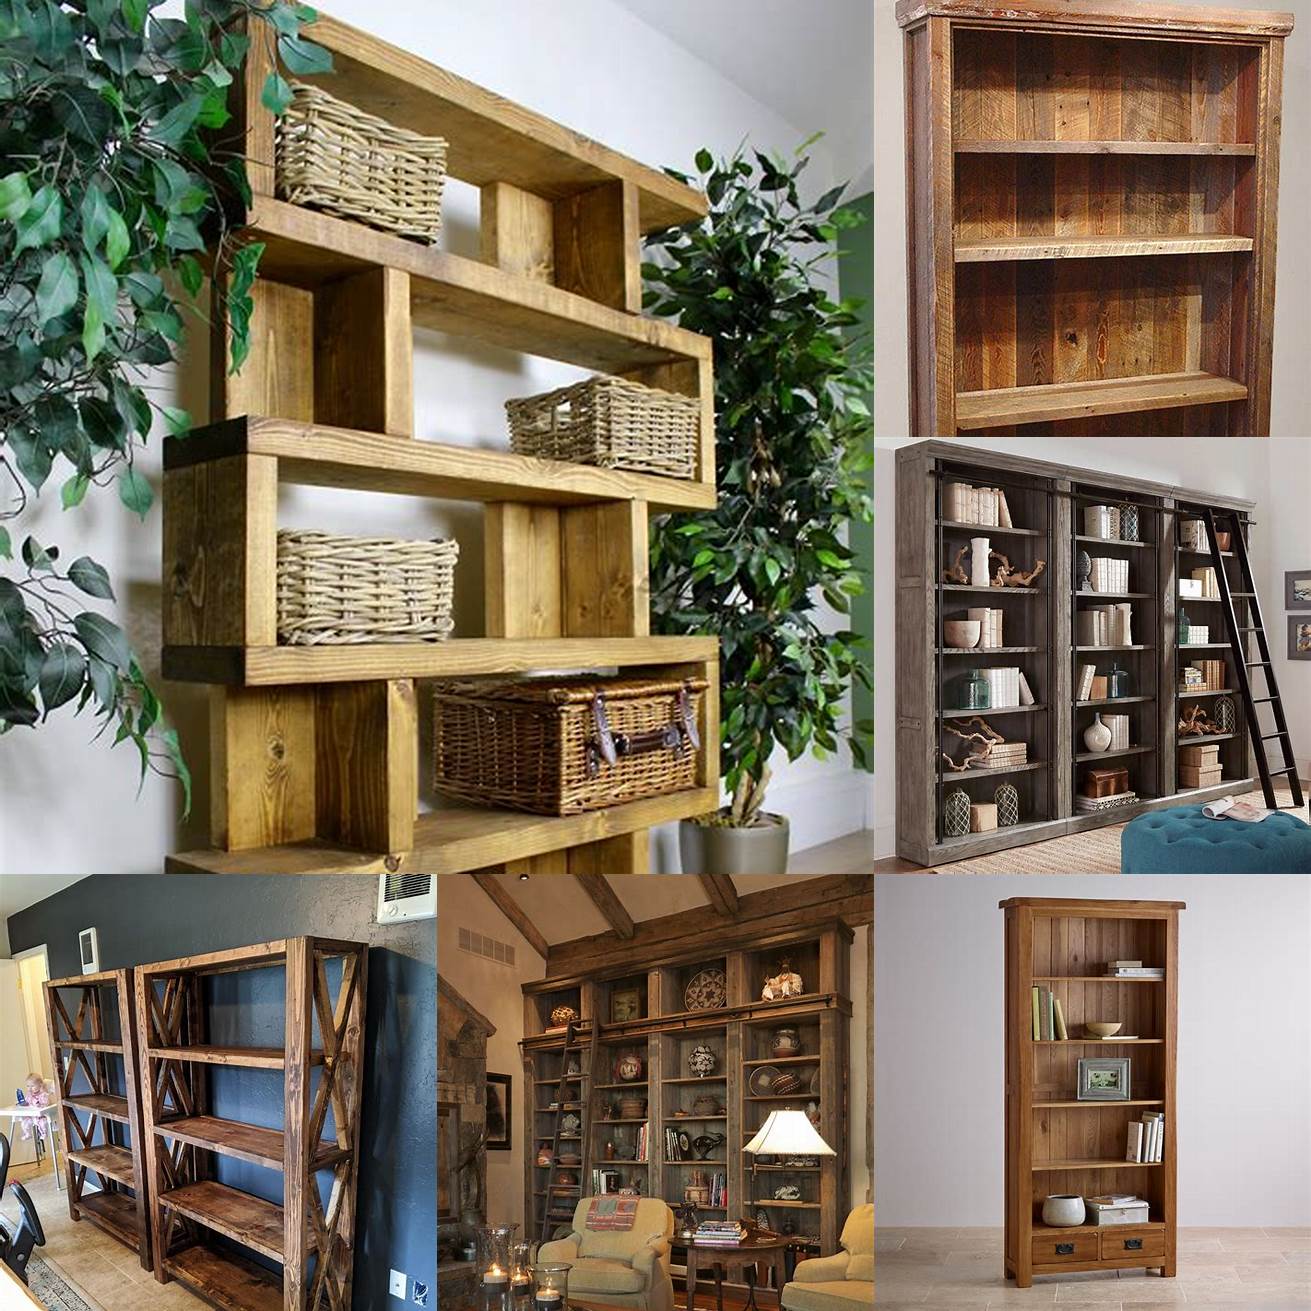 Rustic wooden bookshelves